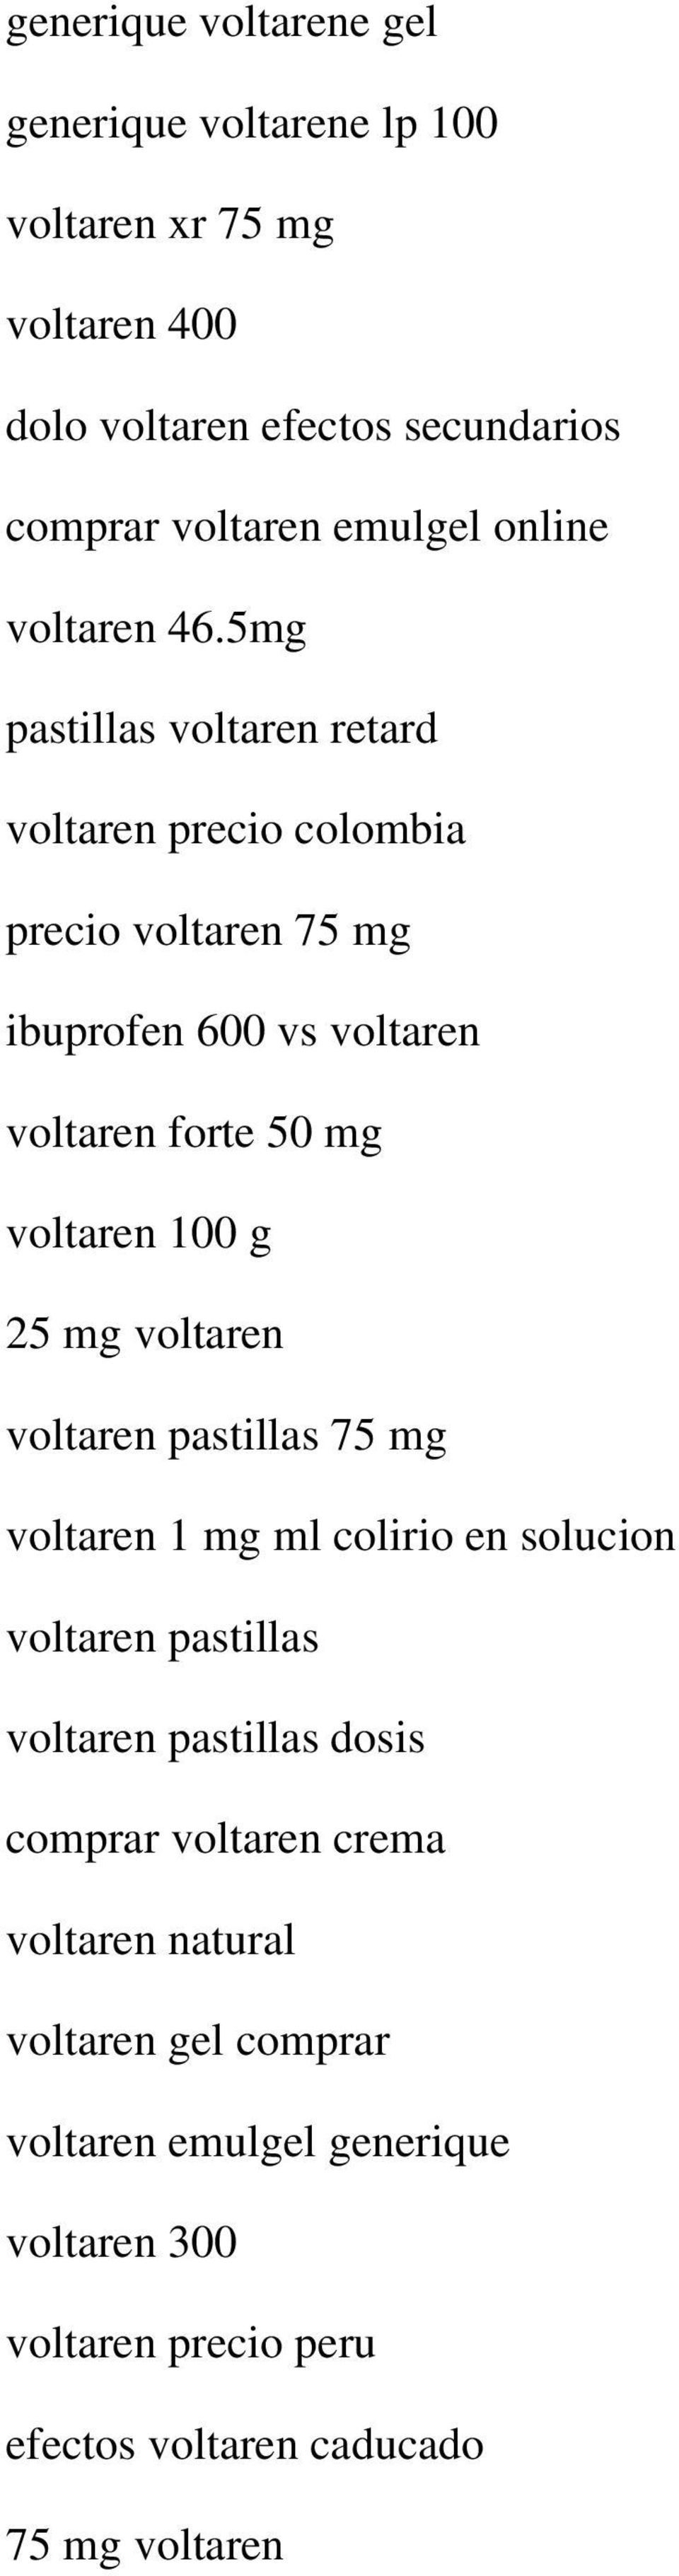 5mg pastillas voltaren retard voltaren precio colombia precio voltaren 75 mg ibuprofen 600 vs voltaren voltaren forte 50 mg voltaren 100 g 25 mg